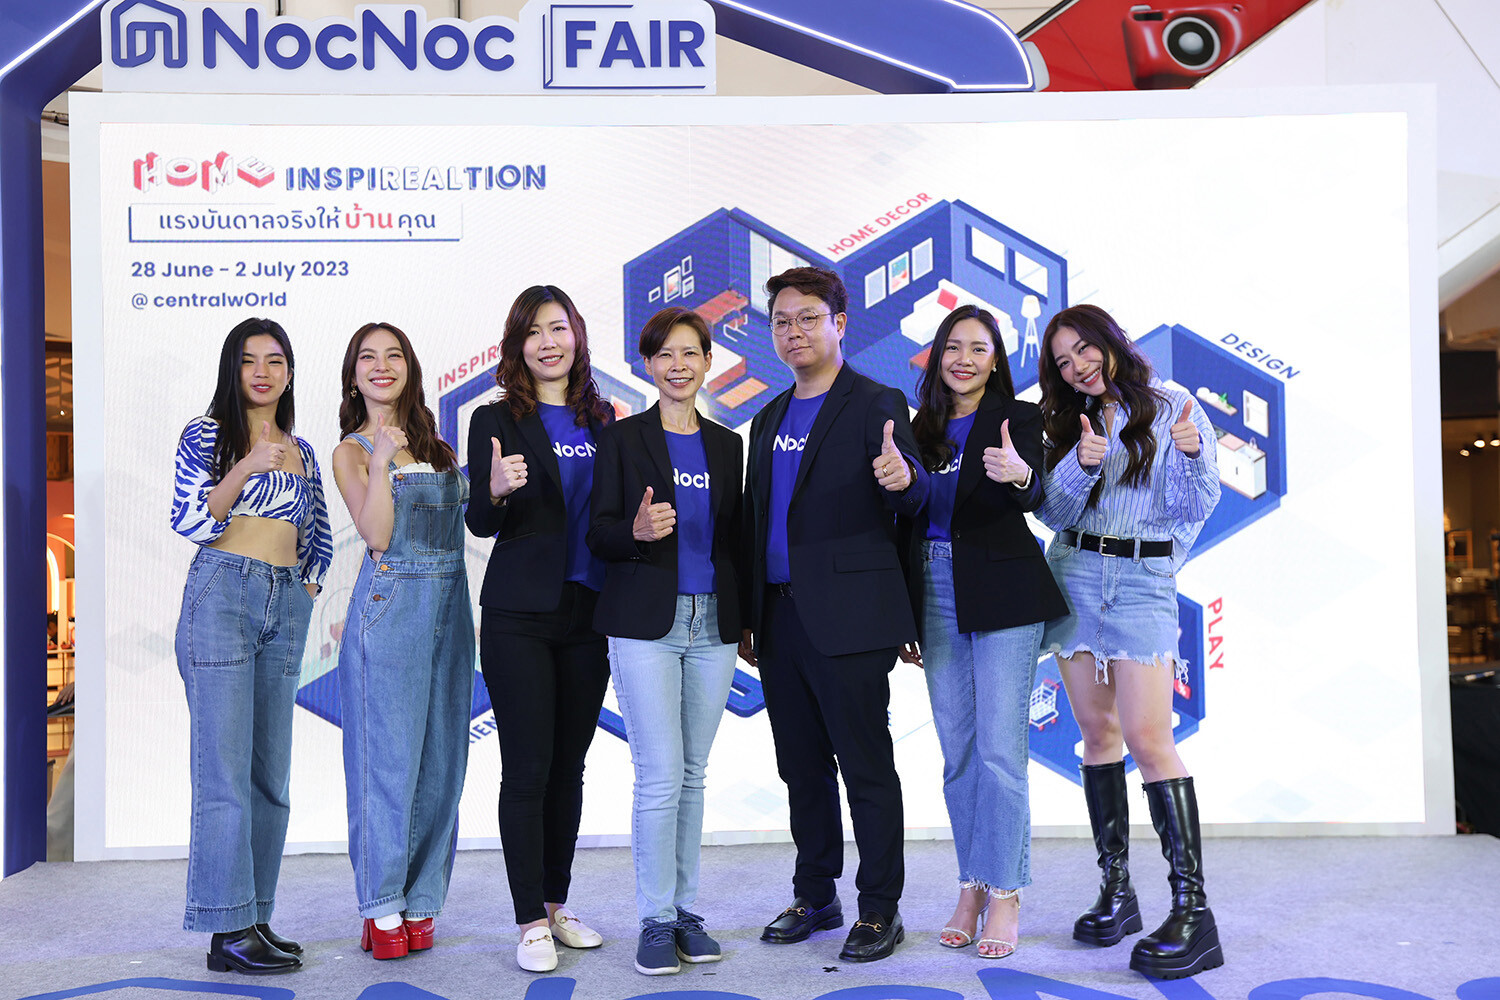 NocNoc จัด "NocNoc Fair" งานแฟร์เพื่อคนรักบ้านสุดยิ่งใหญ่ใจกลางเมือง เนรมิตพื้นที่แรงบันดาลจริงในการแต่งบ้าน บนโลกออนไลน์สู่โลกออฟไลน์ ครั้งแรก!